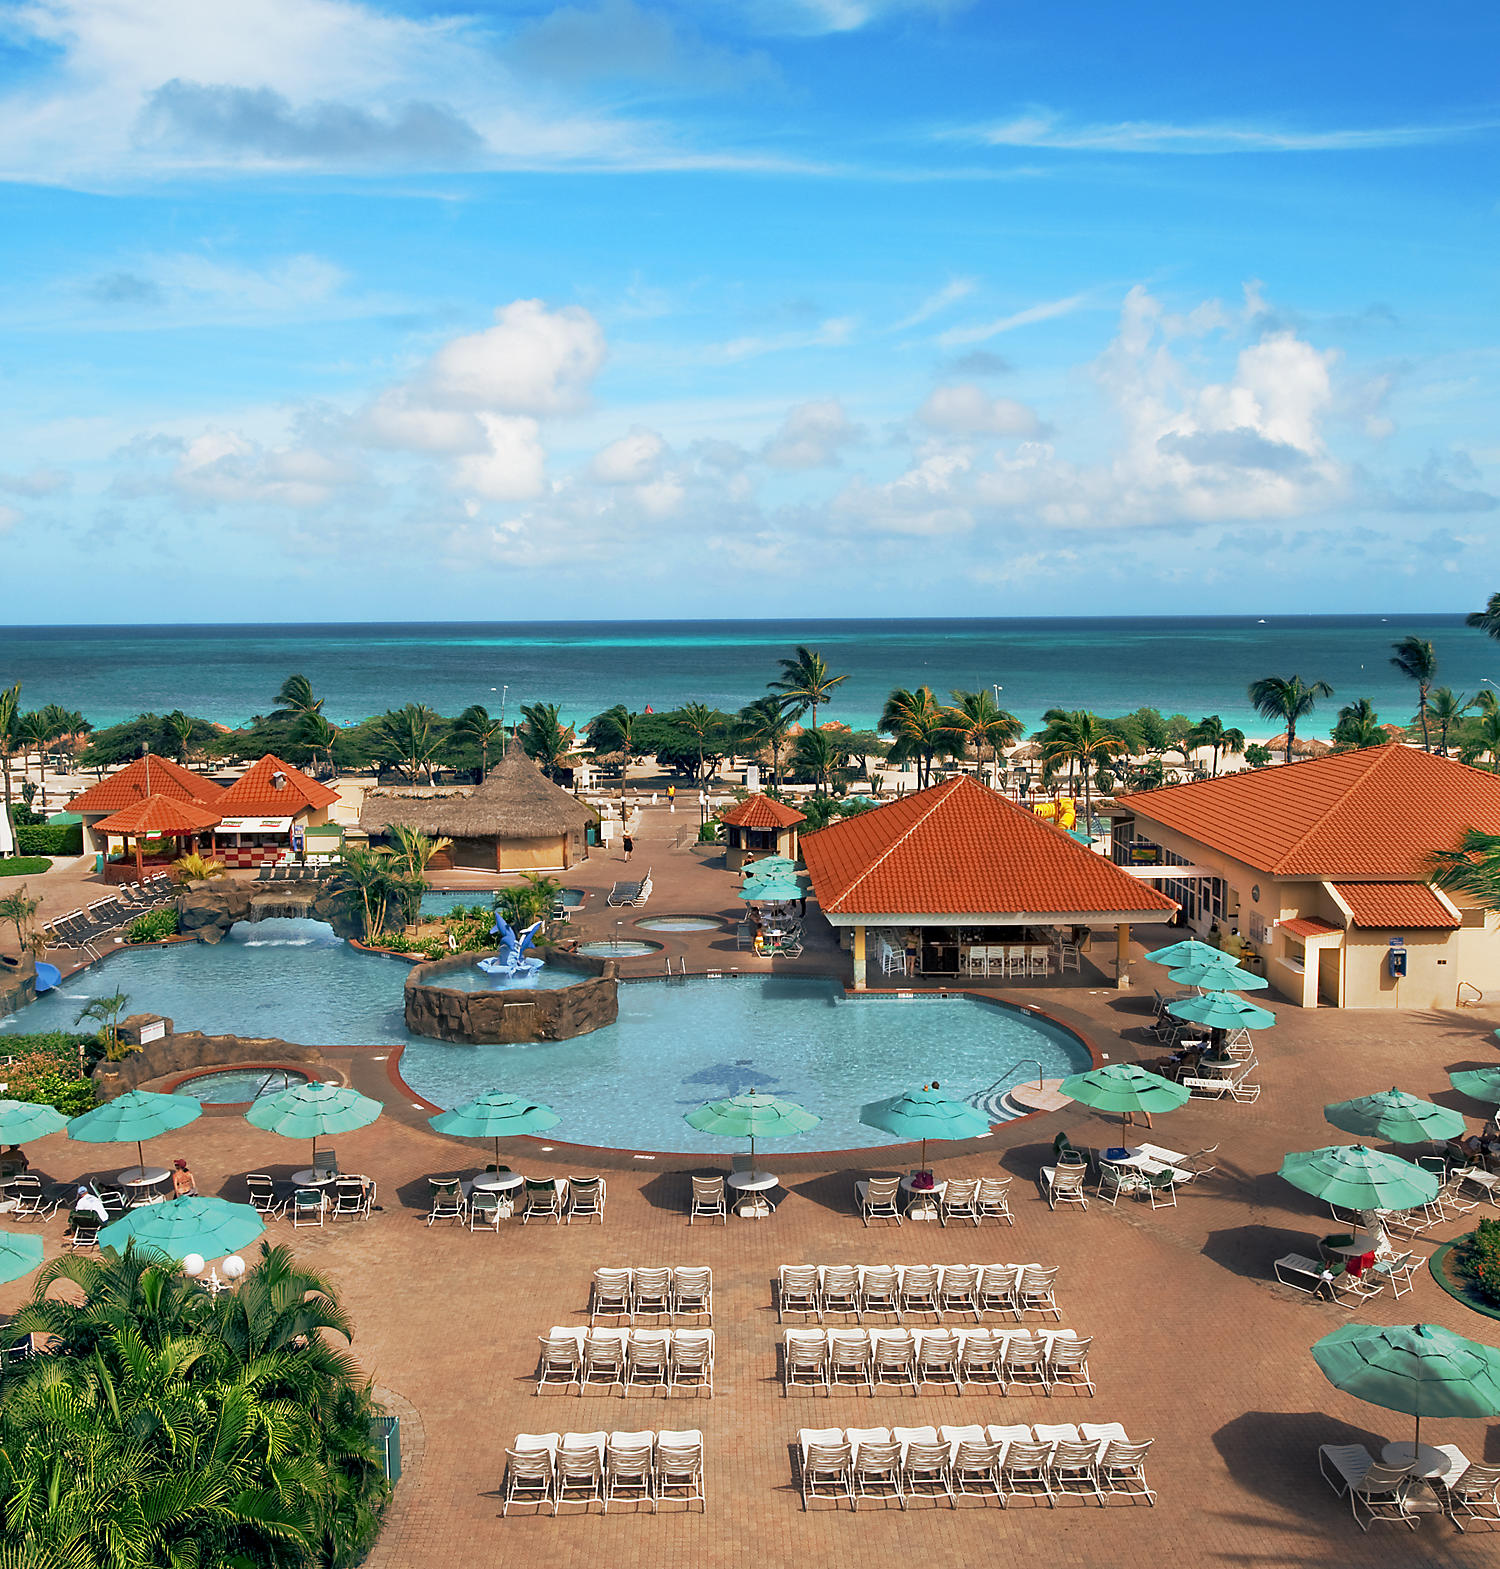 La Cabana Beach Resort And Oranjestad Aruba Bluegreen Vacations. 